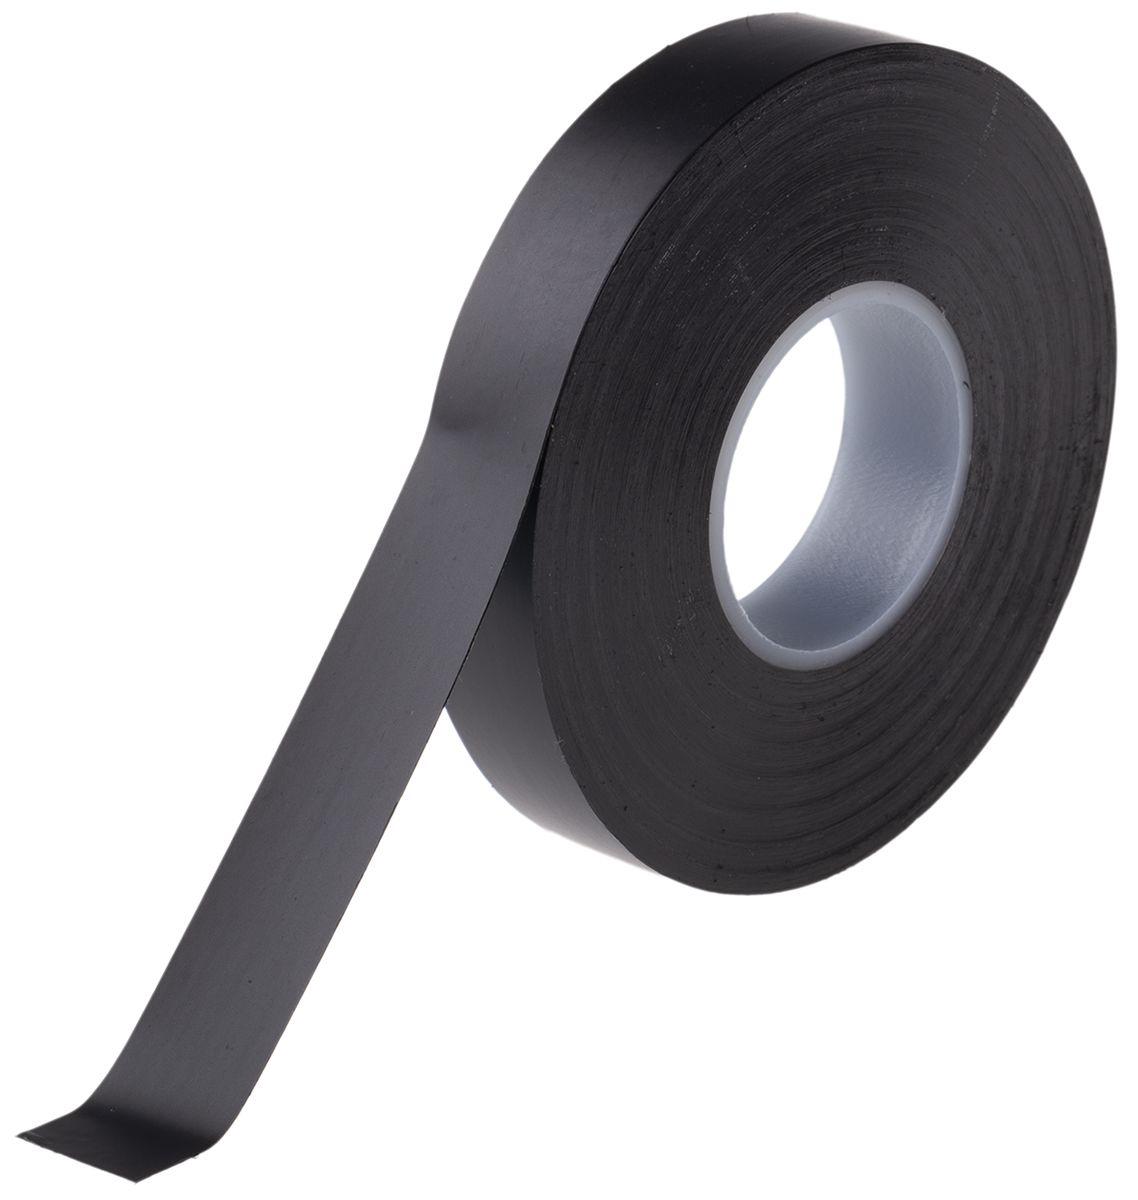 Cinta aislante de PVC Advance Tapes AT7 de color Negro, 12mm x 20m, grosor 0.13mm